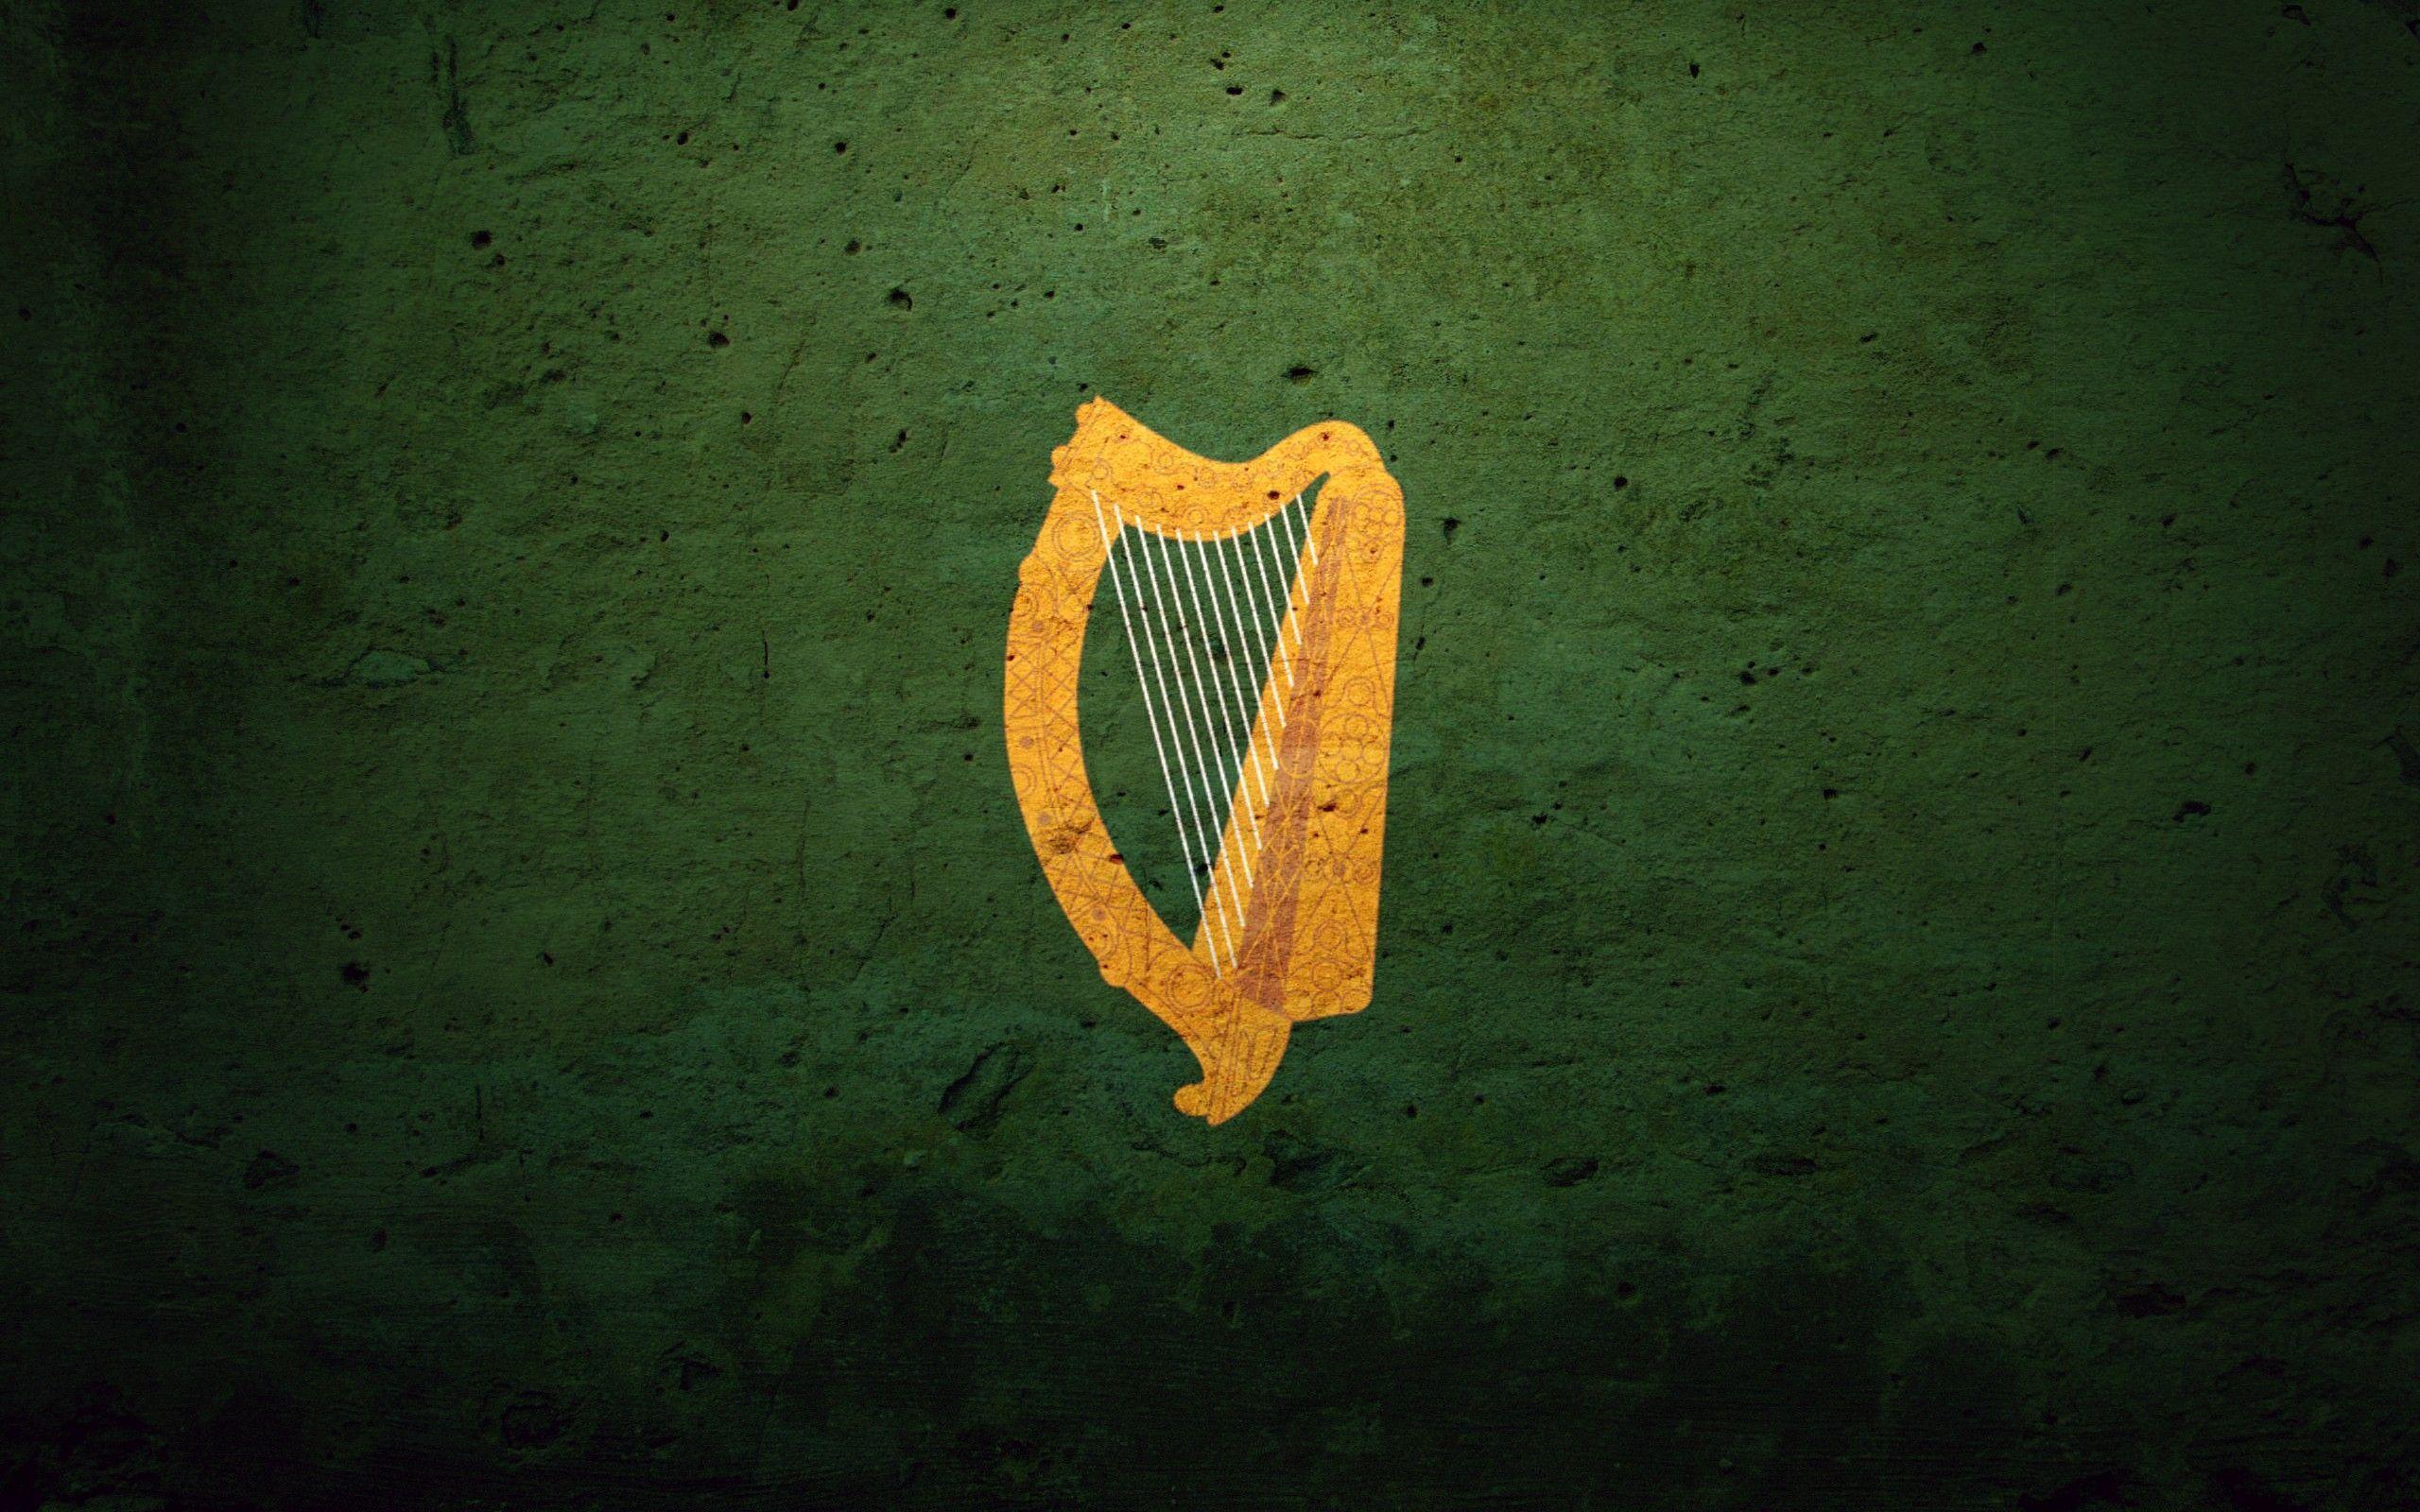 Wallpaper For > Celtic Irish Wallpaper